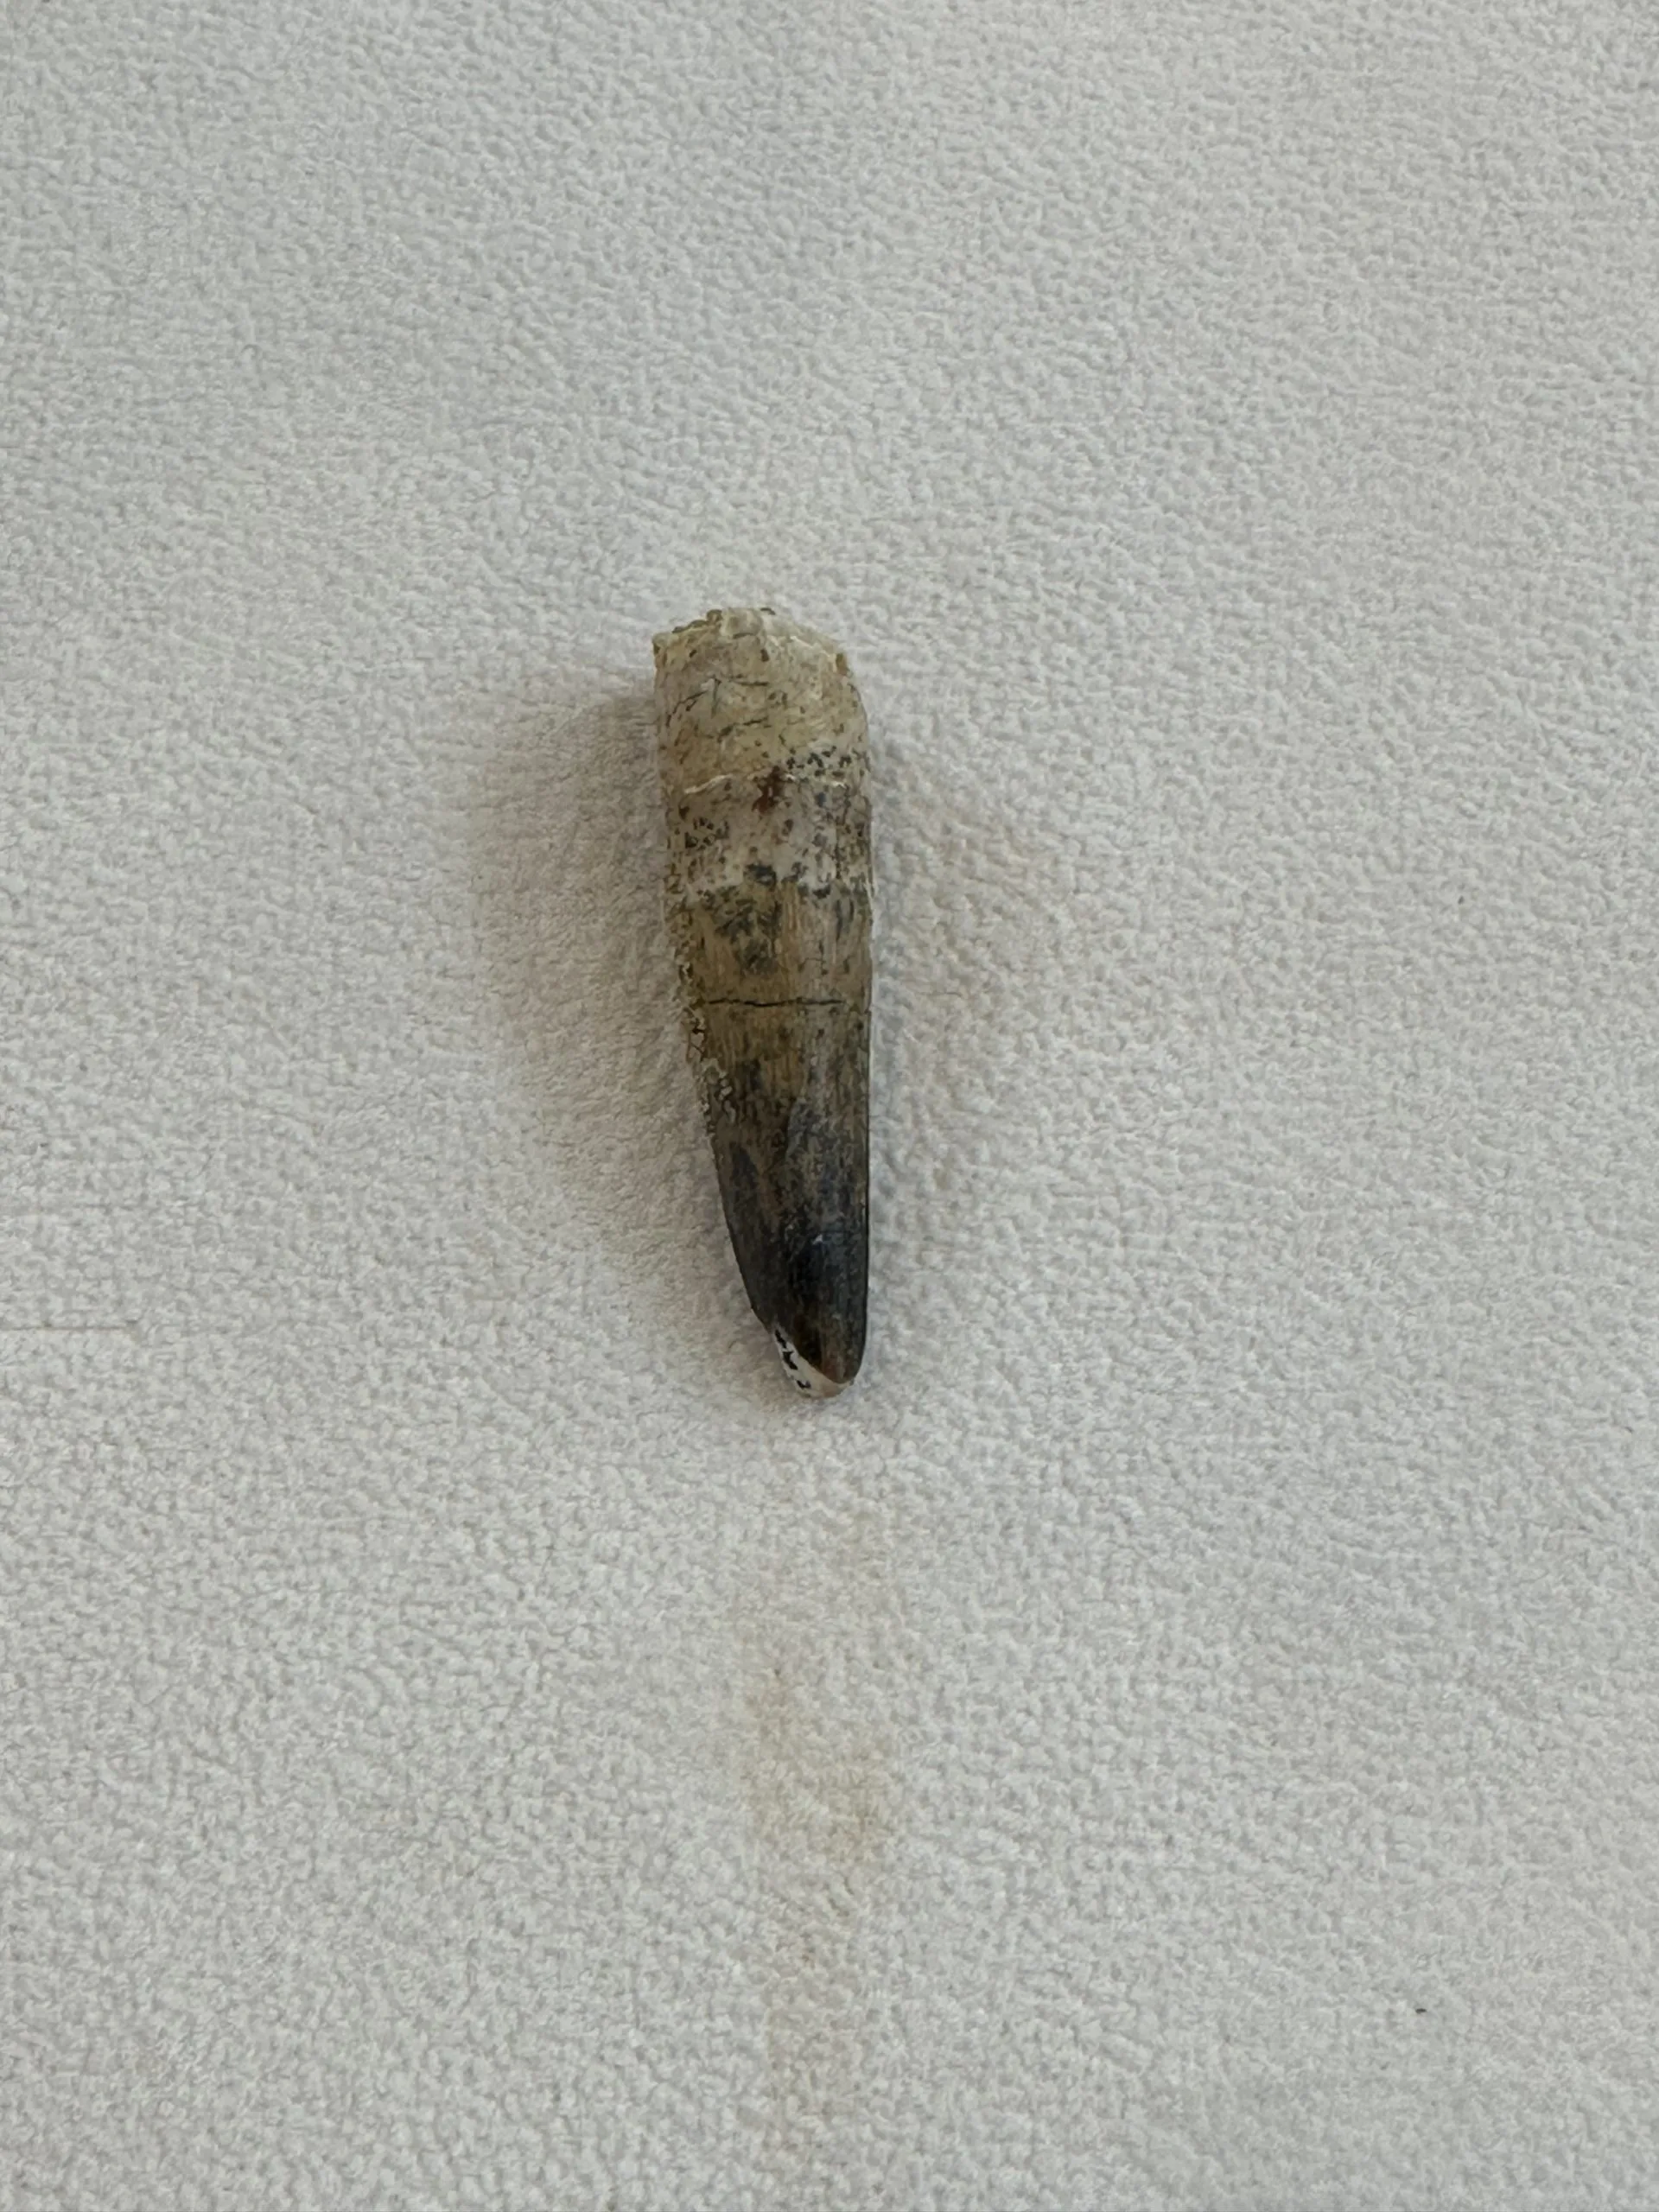 Spinosaurus Tooth, 1 1/2 inch dino fossil Prehistoric Online